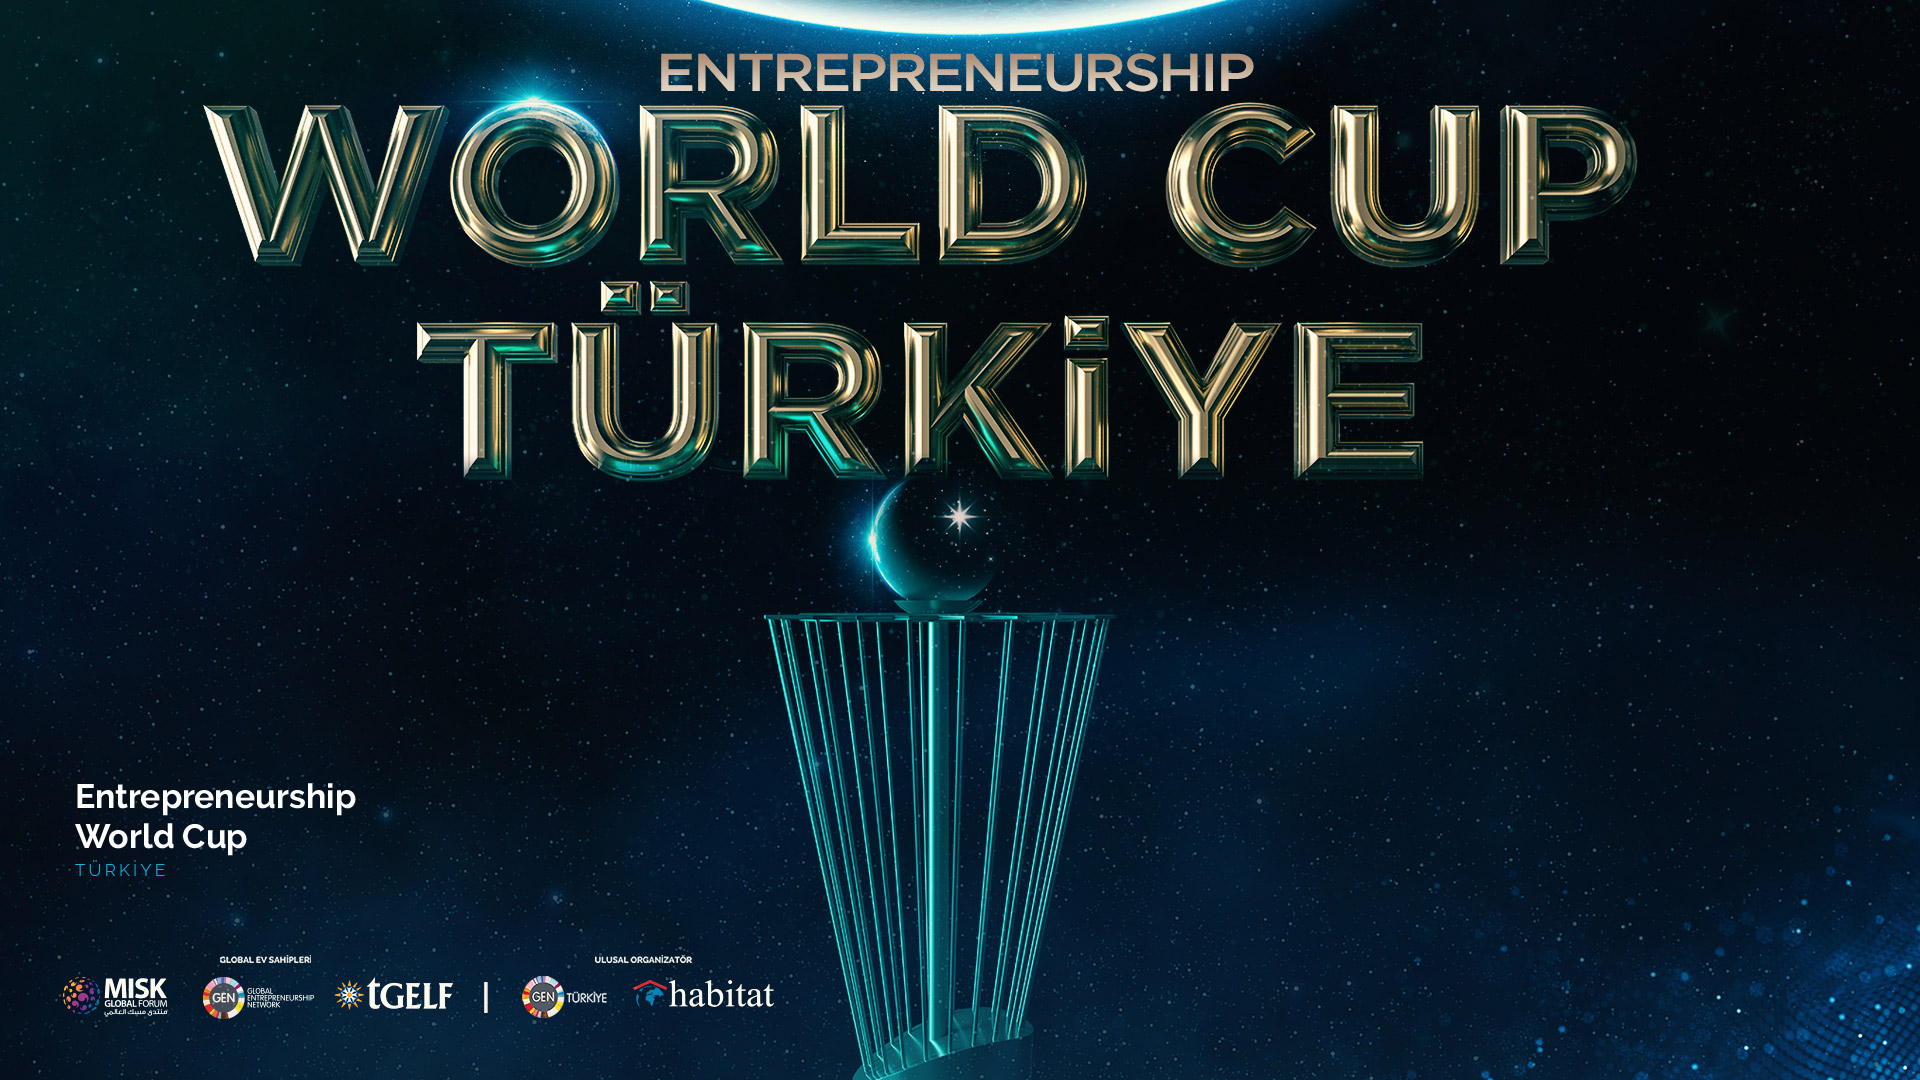 Entrepreneurship World Cup